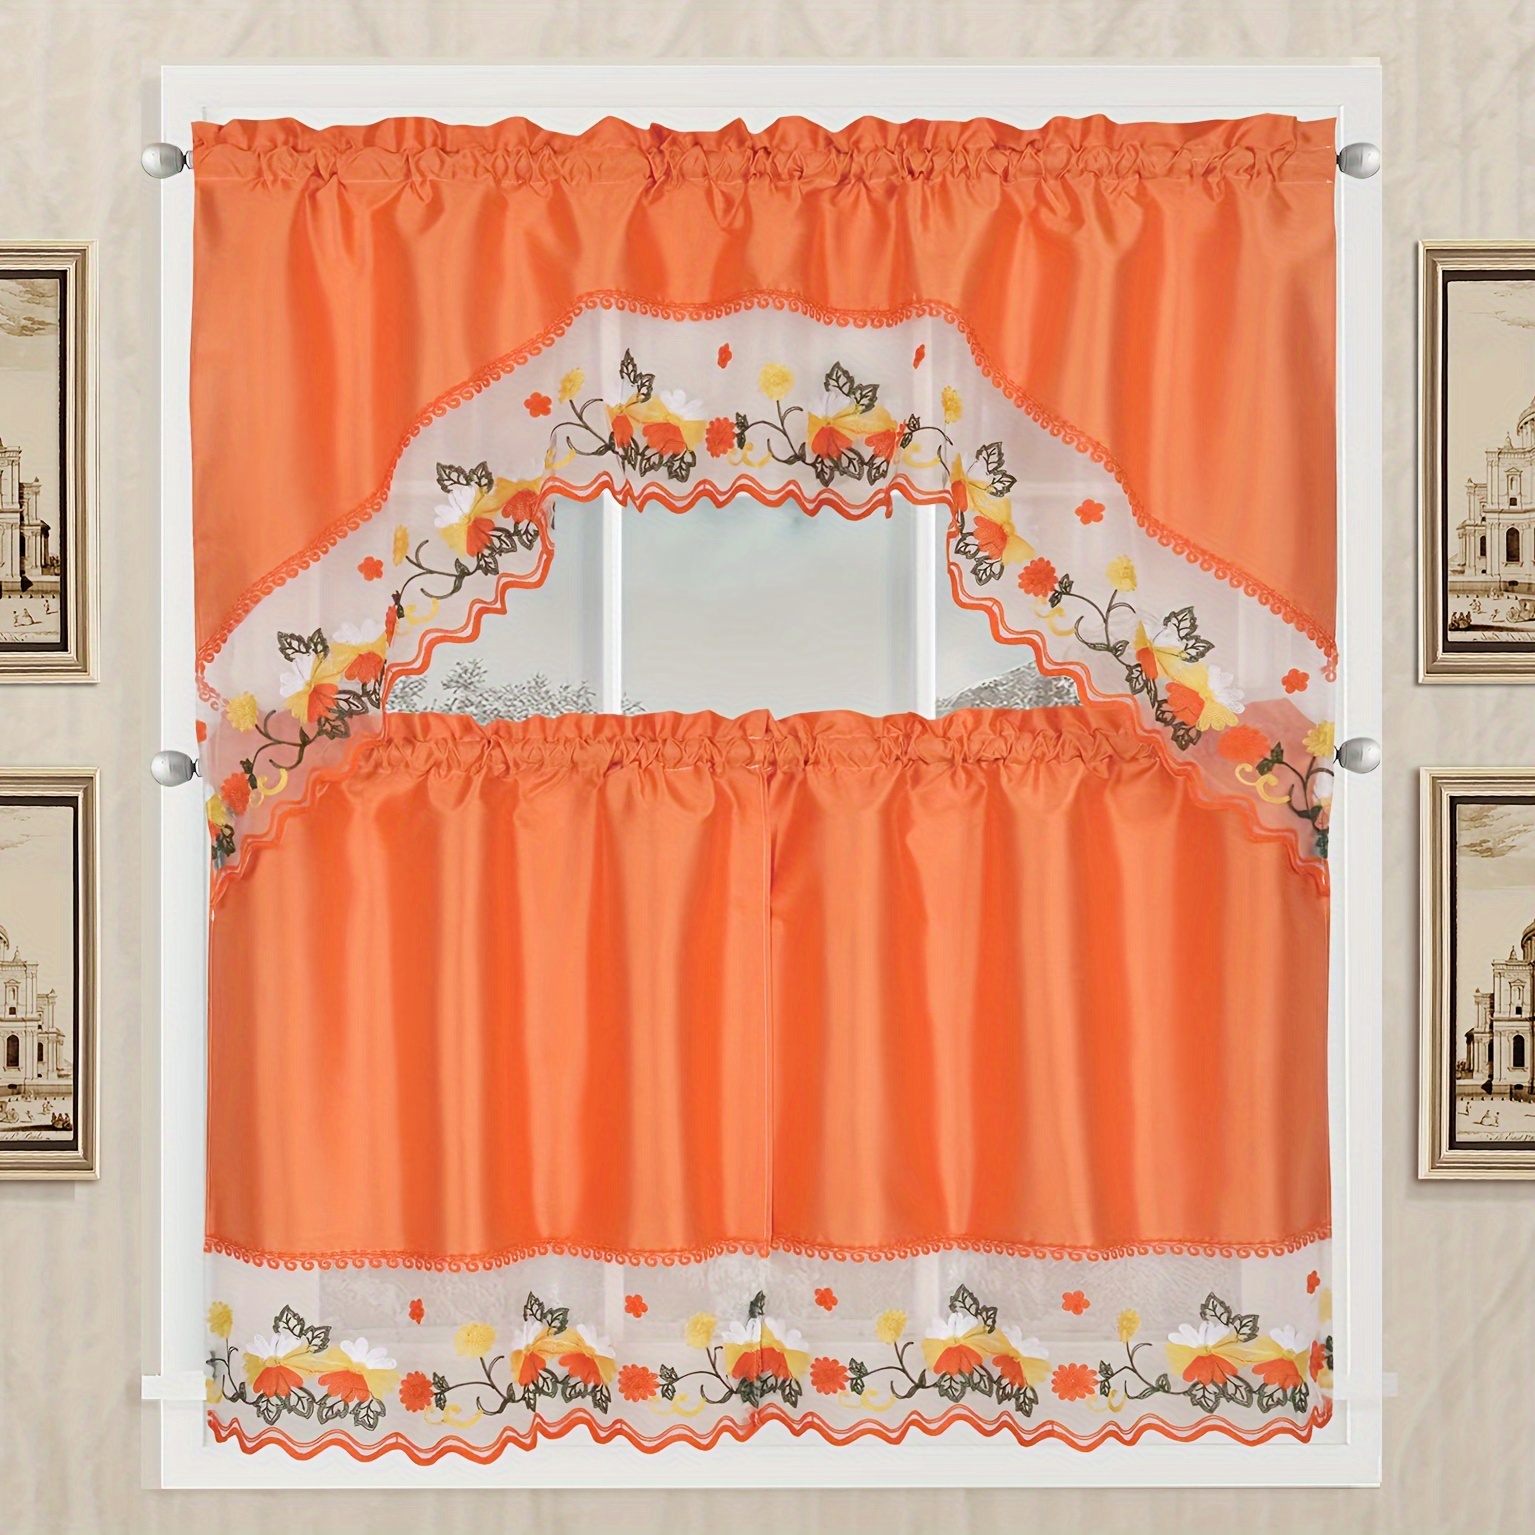  Cenefa de cortina de encaje para ventanas de cocina, puerta,  cenefa transparente con diseño de mariposa para habitación de niñas,  bolsillo para barra, cortinas cortas bordadas florales para baño, sala 